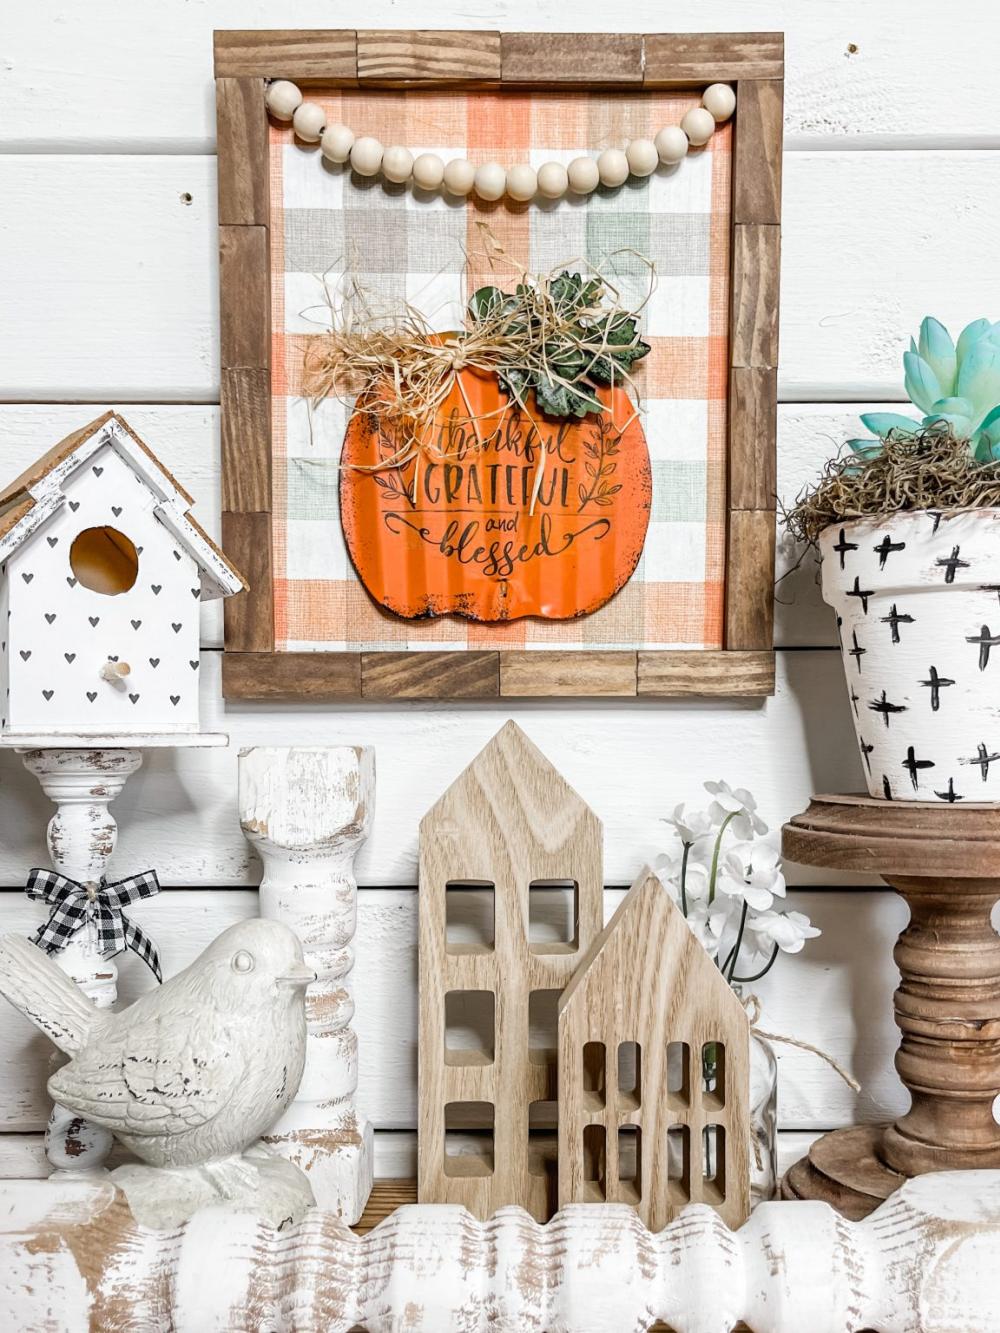 Diy fall pumpkin rustic home decor happy thanksgiving sign